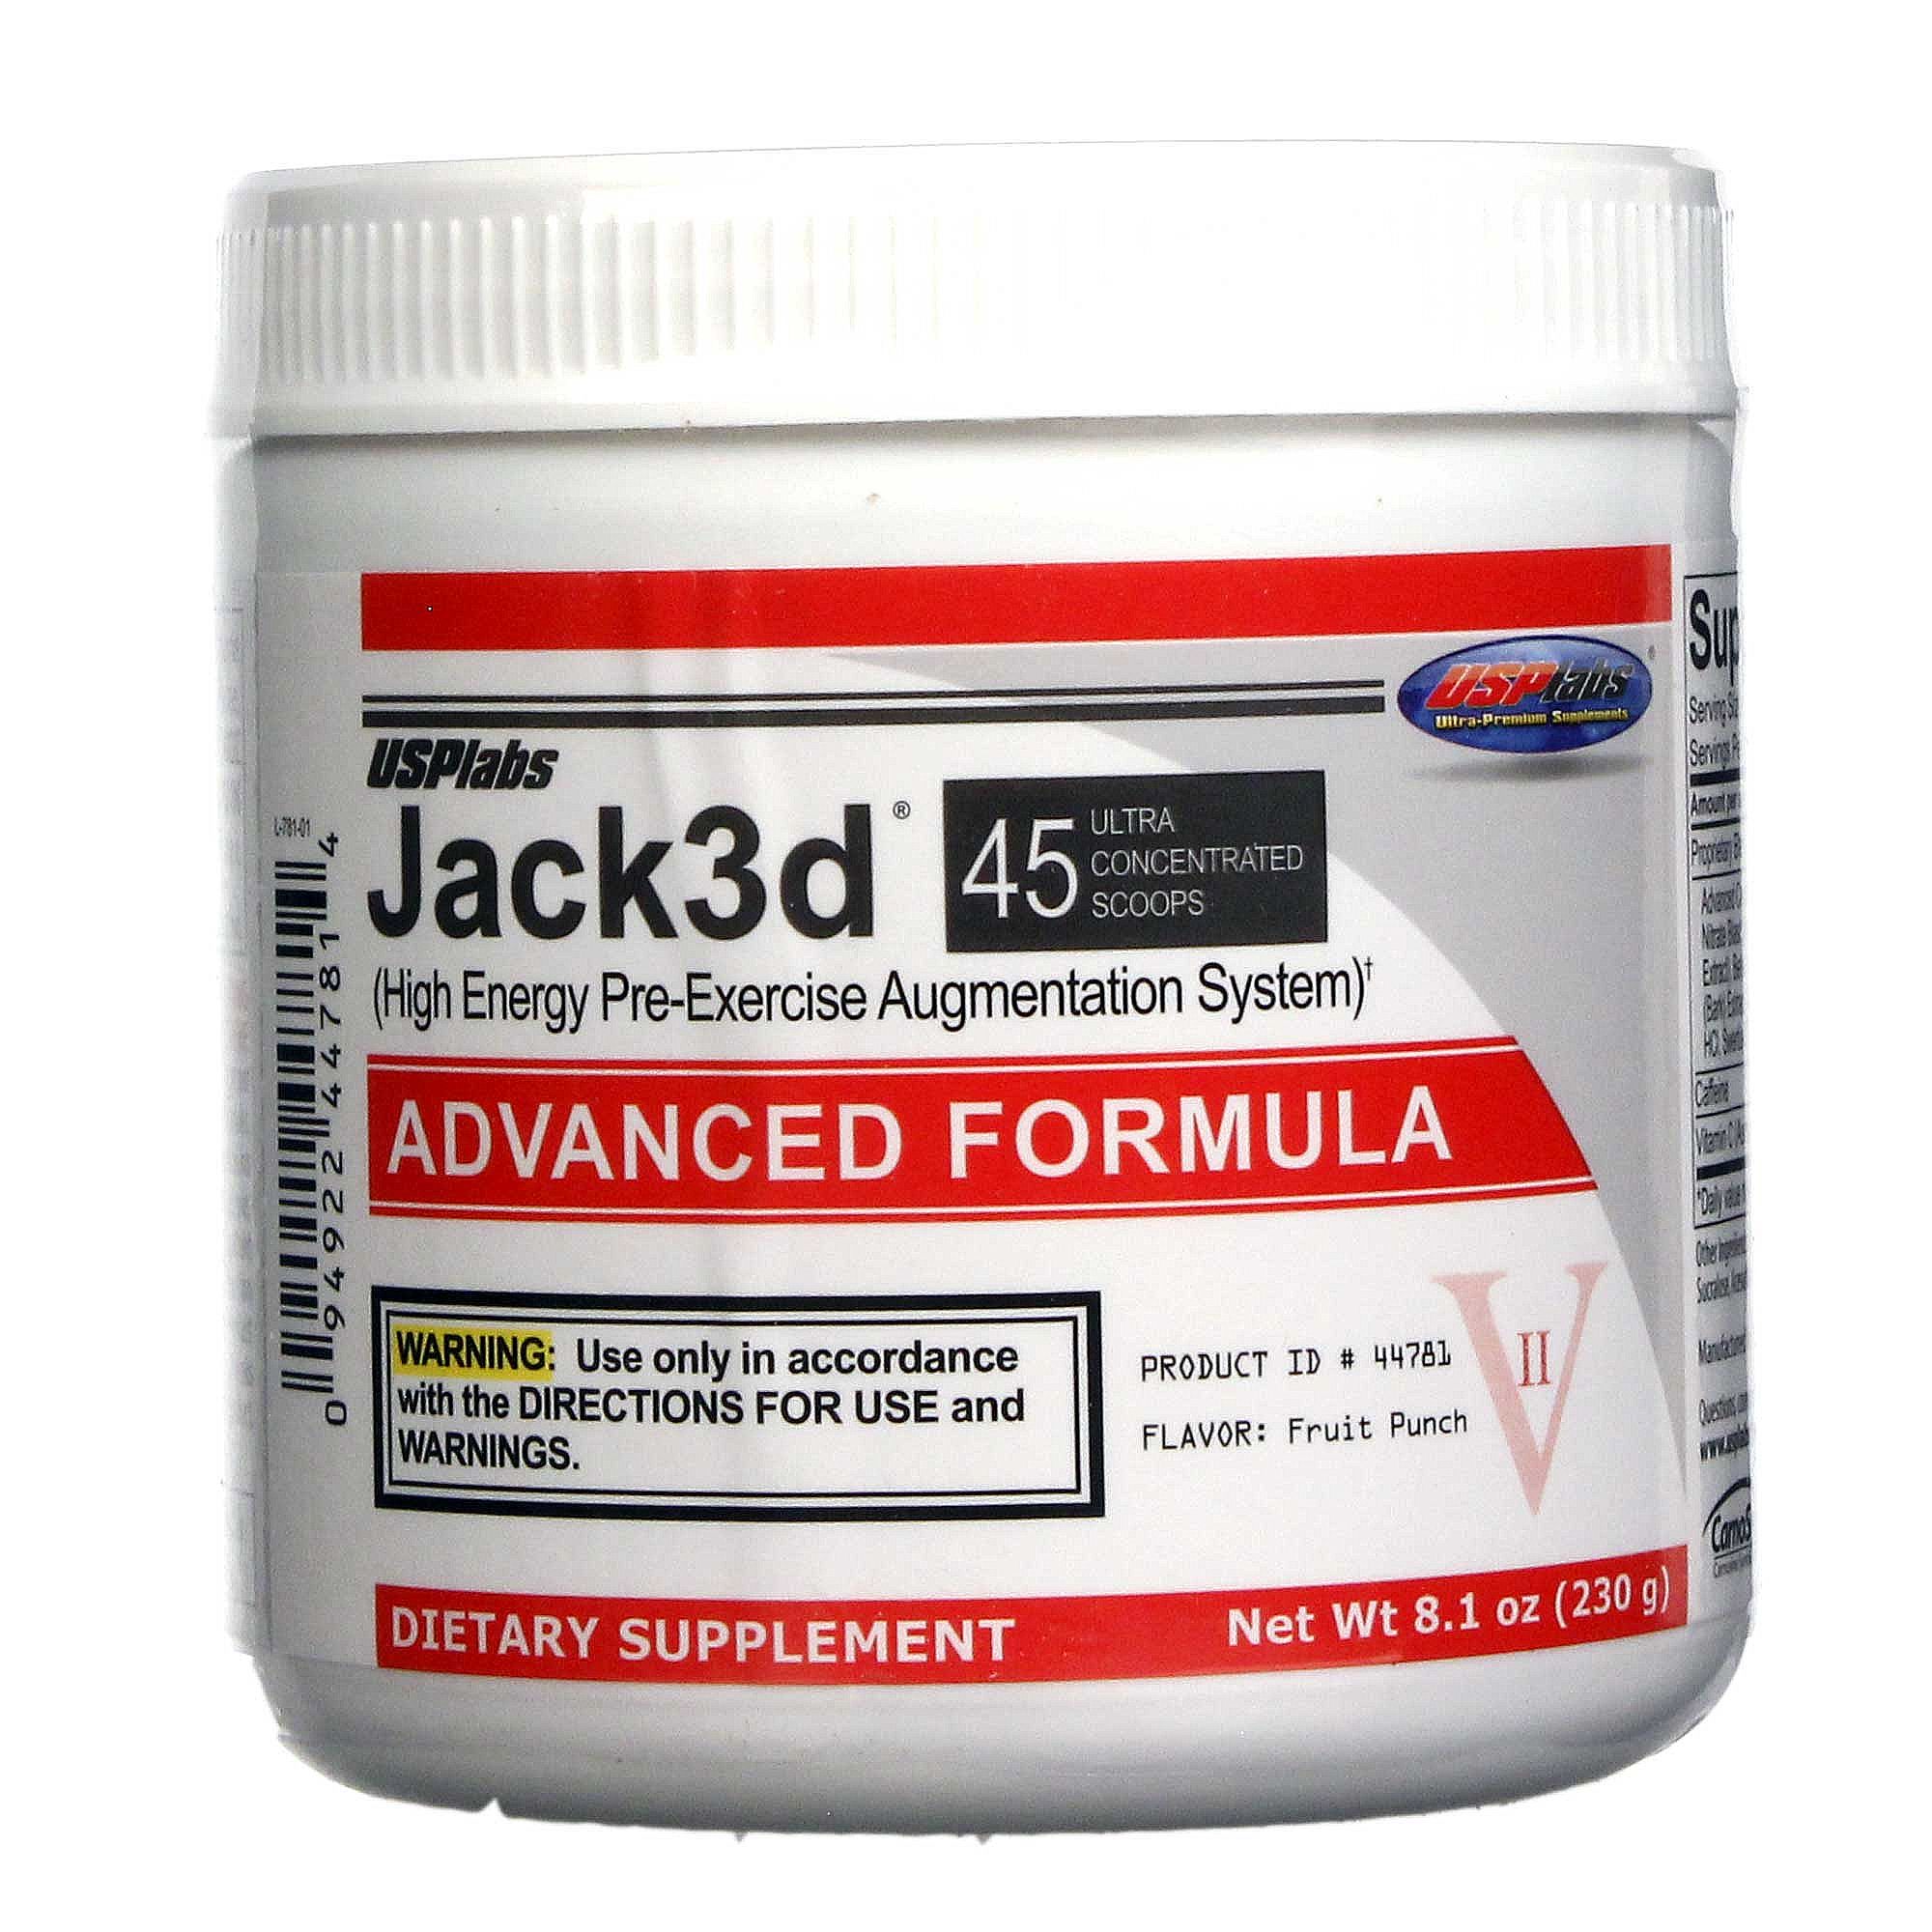 USPLabs Jack3D Advanced Formula